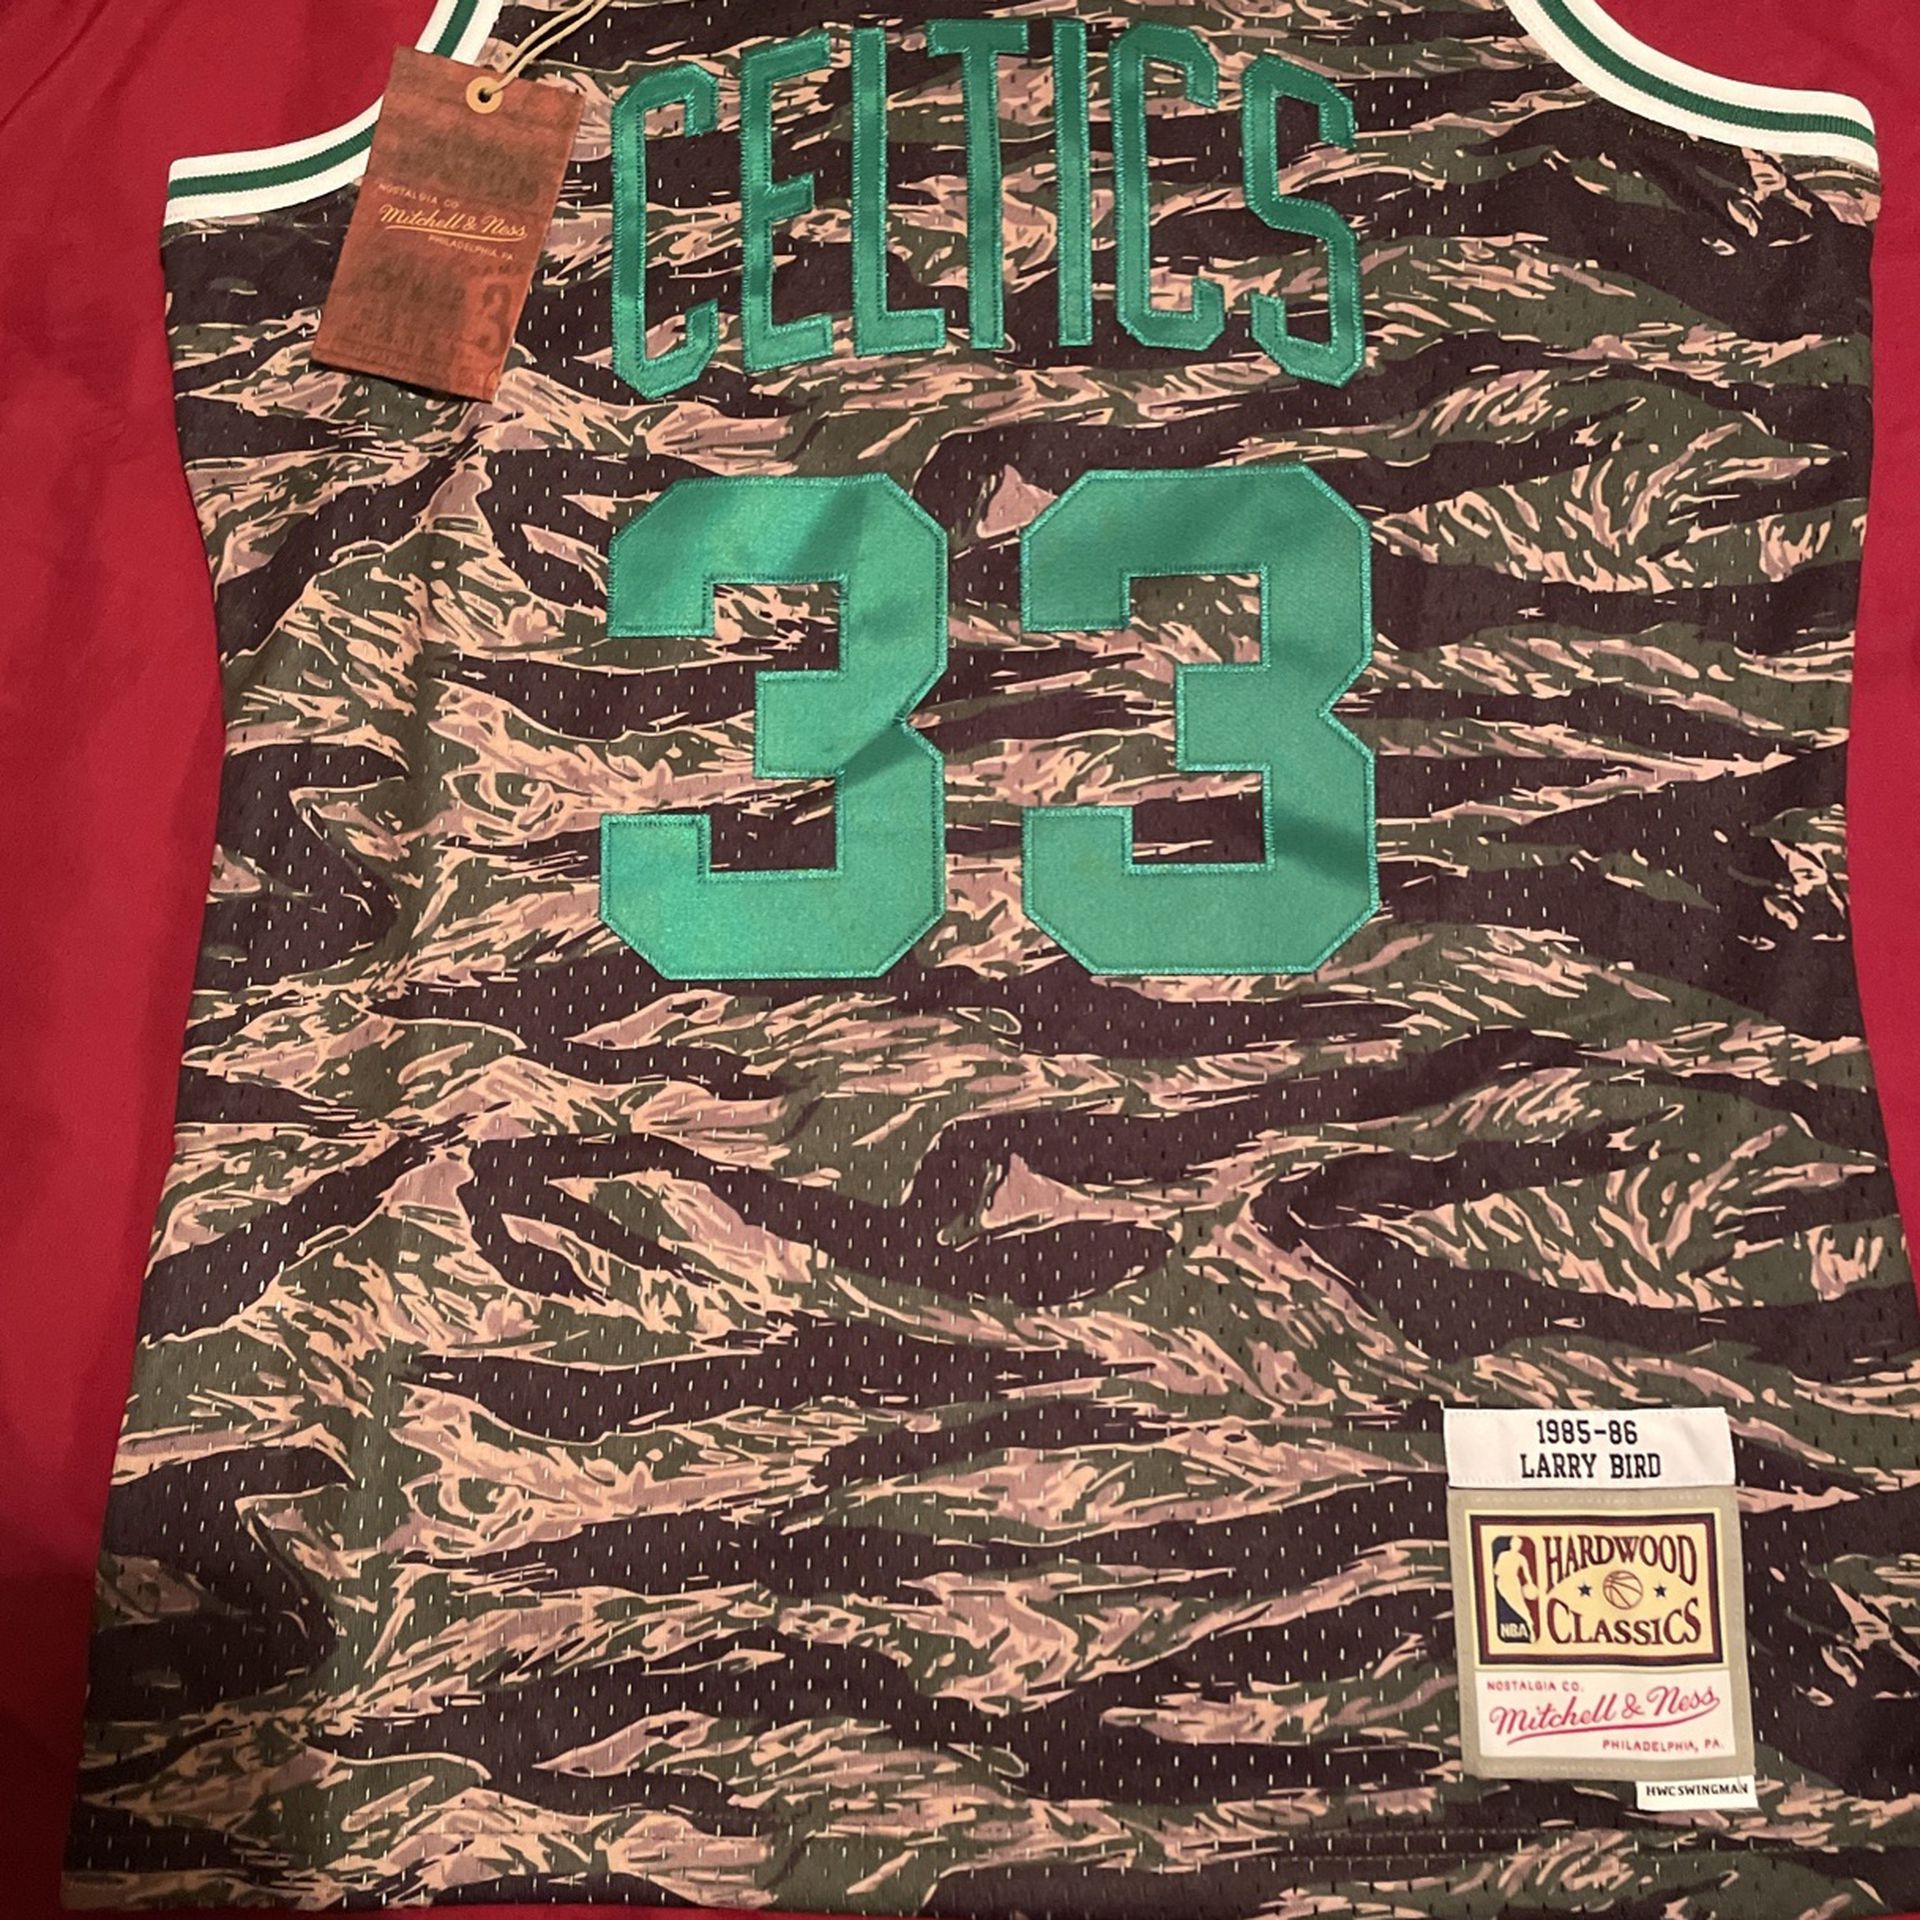 Larry Bird 85/86 camouflage jersey